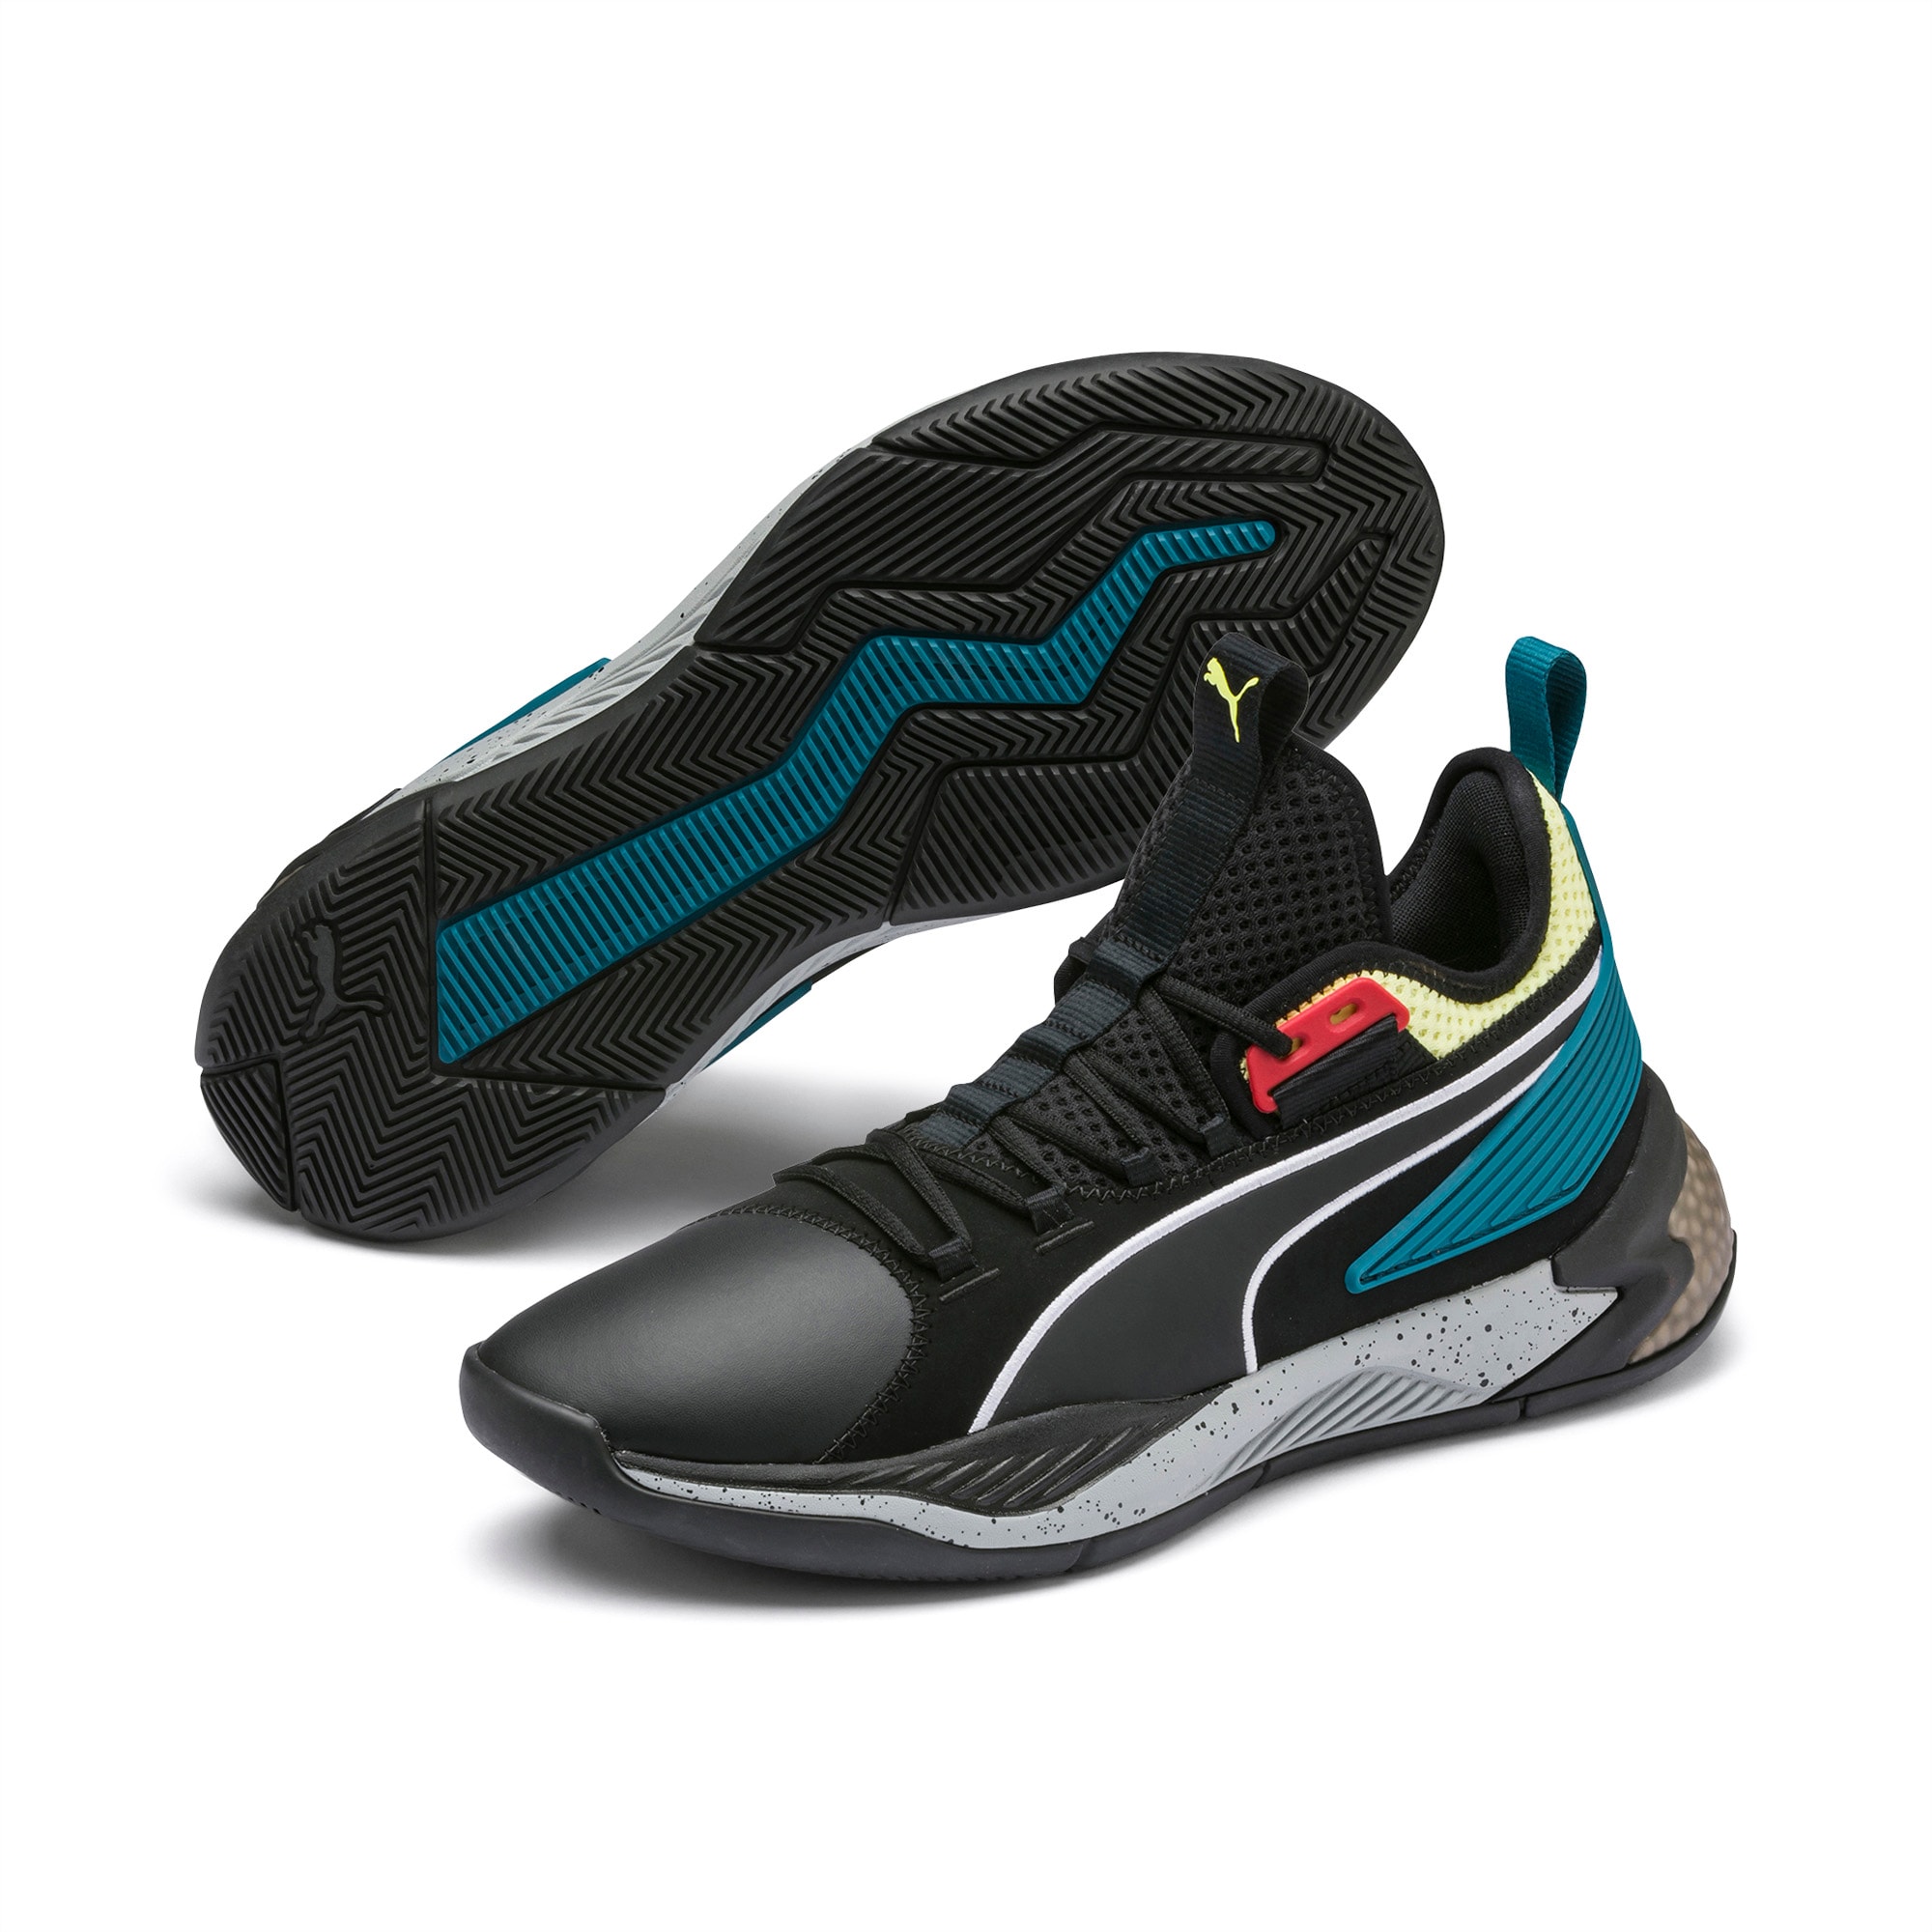 uproar spectra basketball shoes